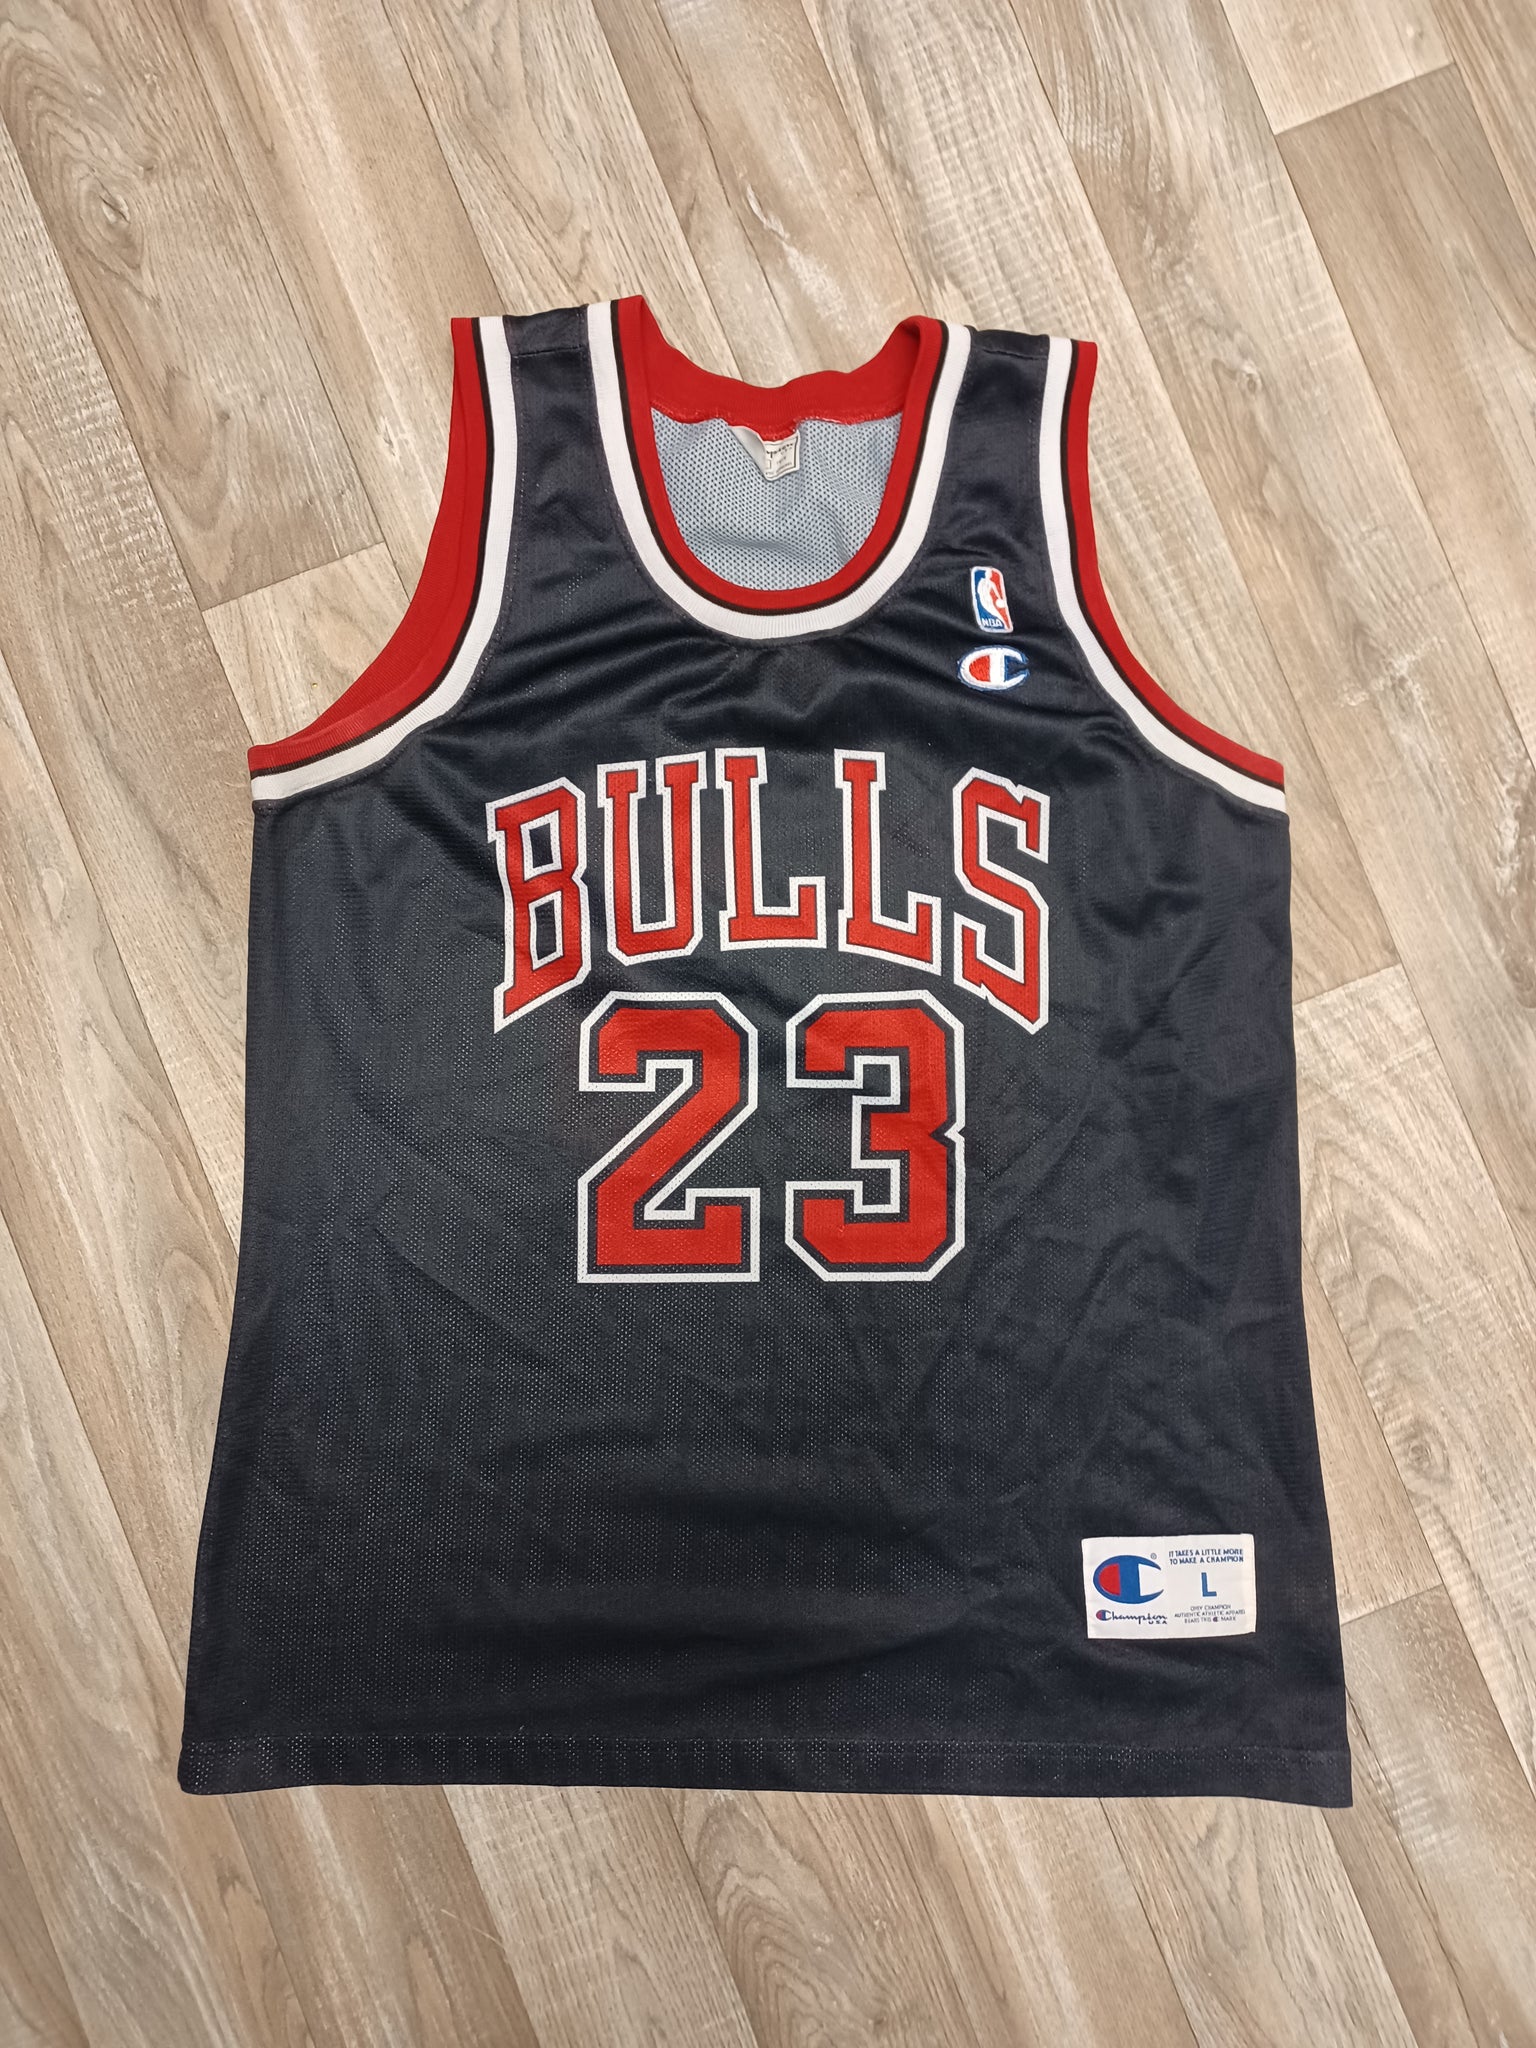 🏀 Michael Jordan Chicago Bulls Jersey Size Large – The Throwback